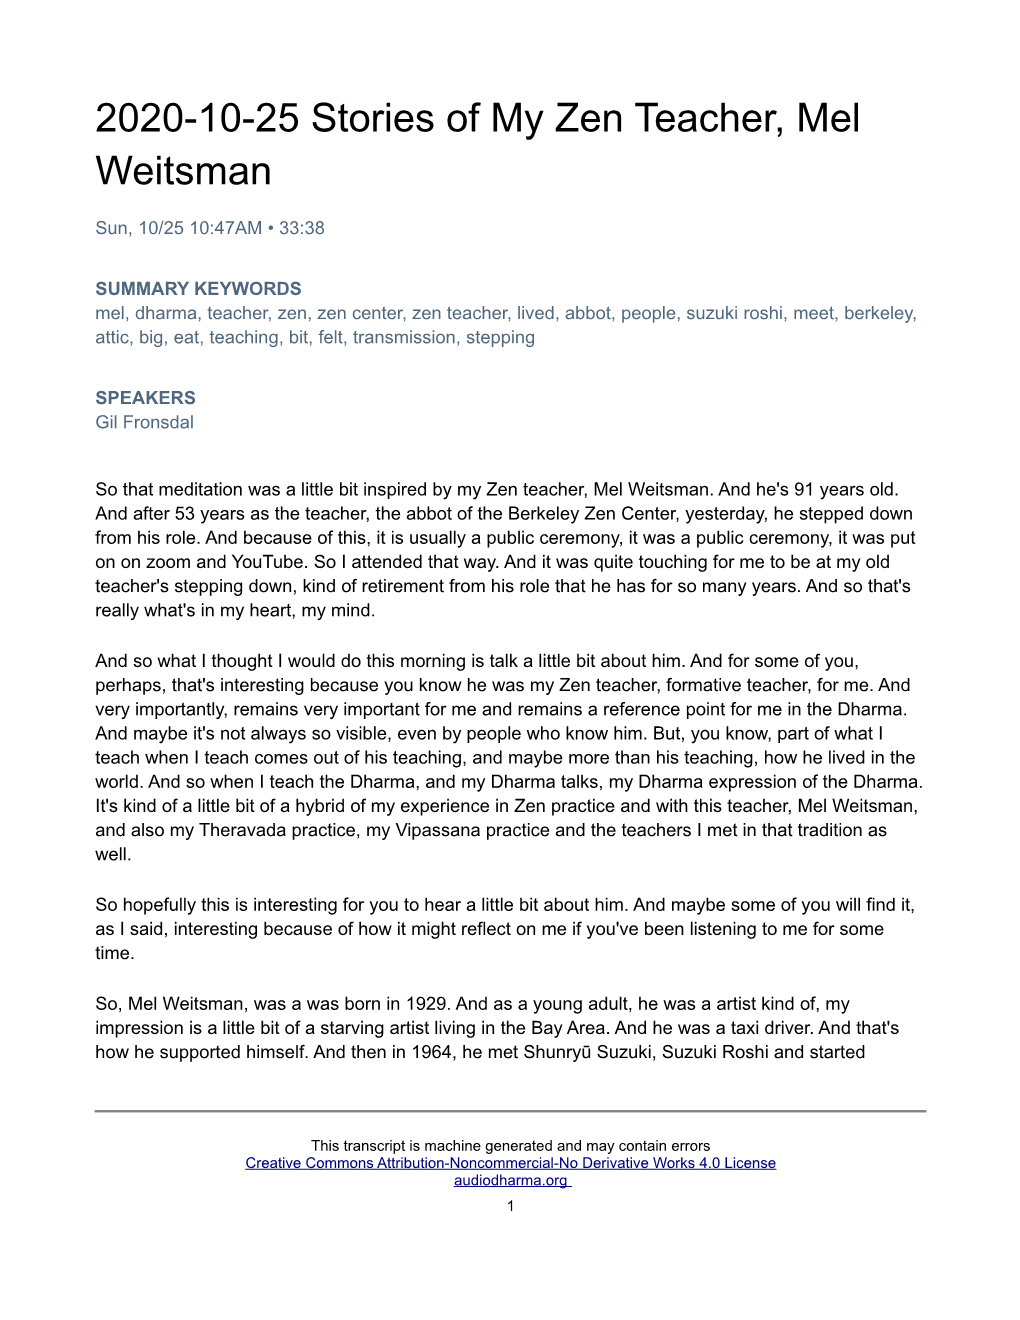 2020-10-25 Stories of My Zen Teacher, Mel Weitsman